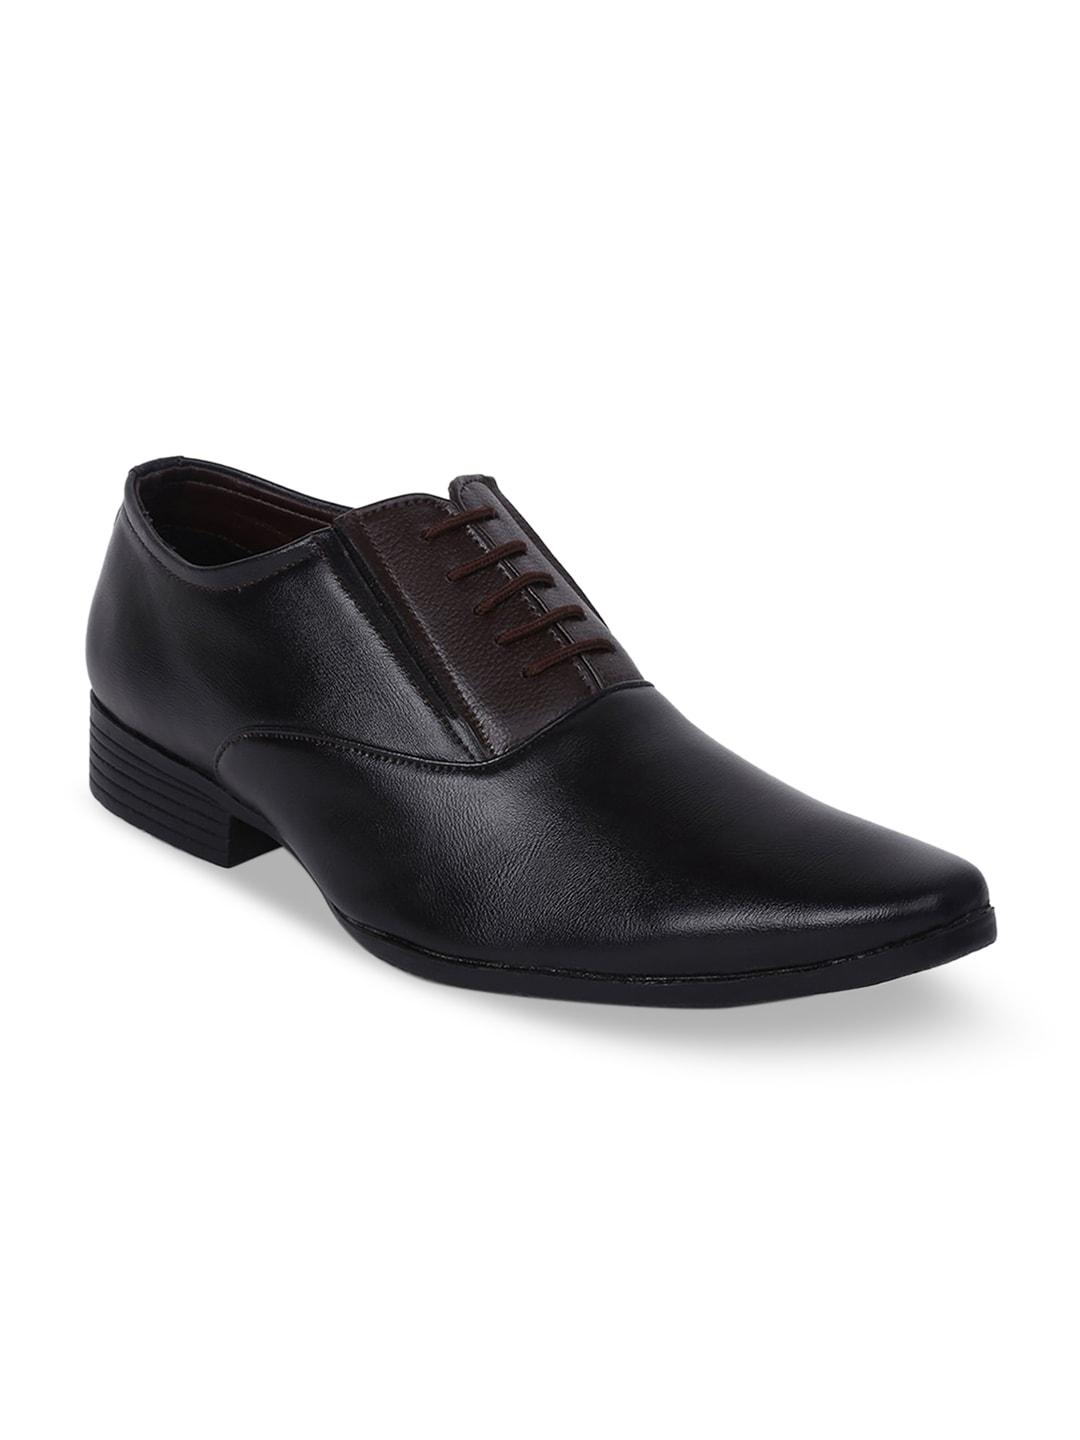 paragon-men-brown-oxford-formal-shoe